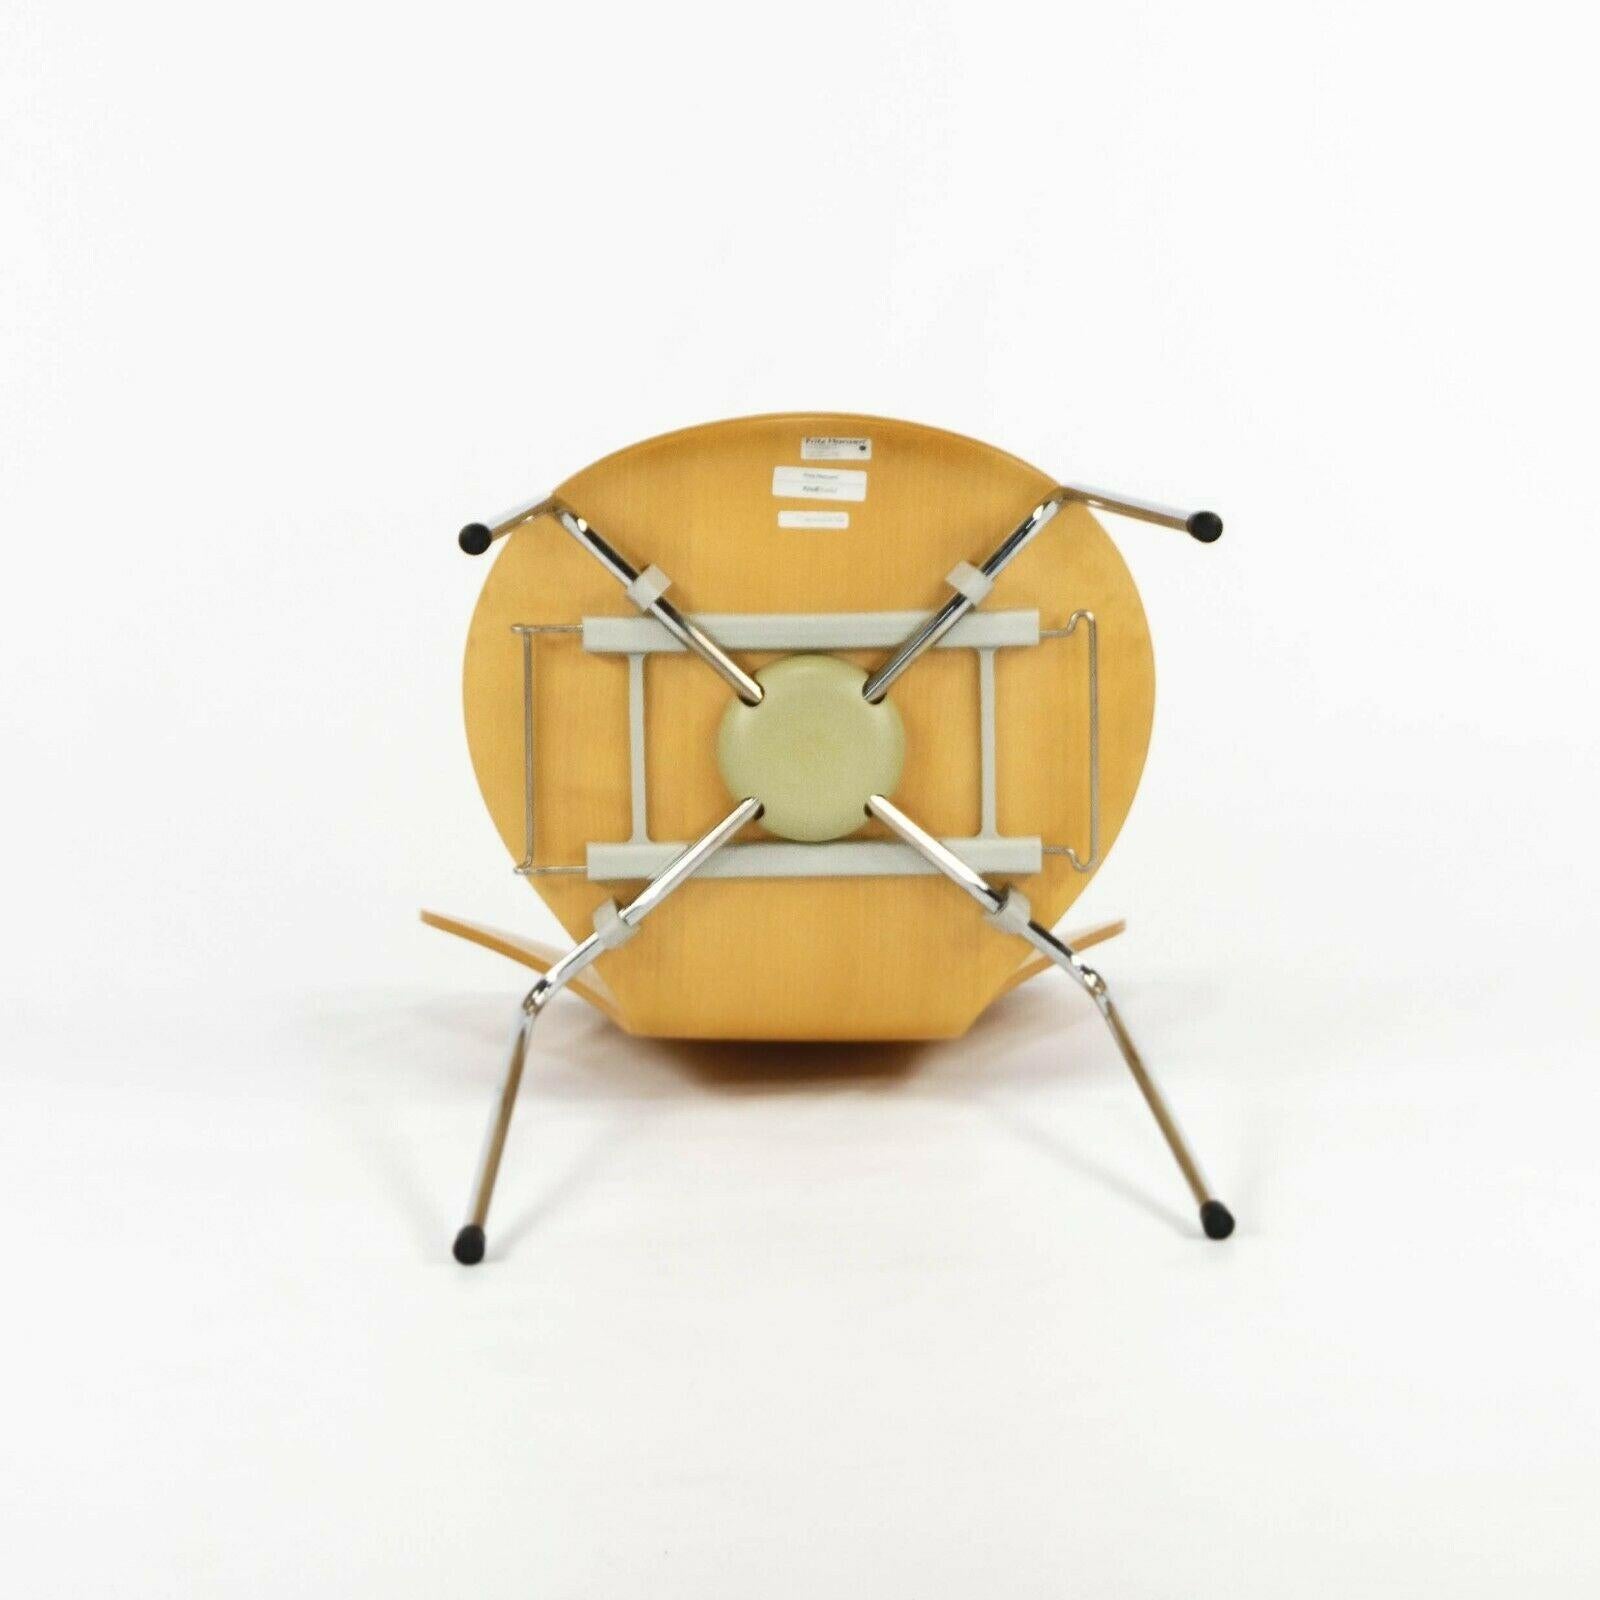 2001 Arne Jacobsen for Fritz Hansen Knoll Series 7 Stacking & Interlocking Chair For Sale 2